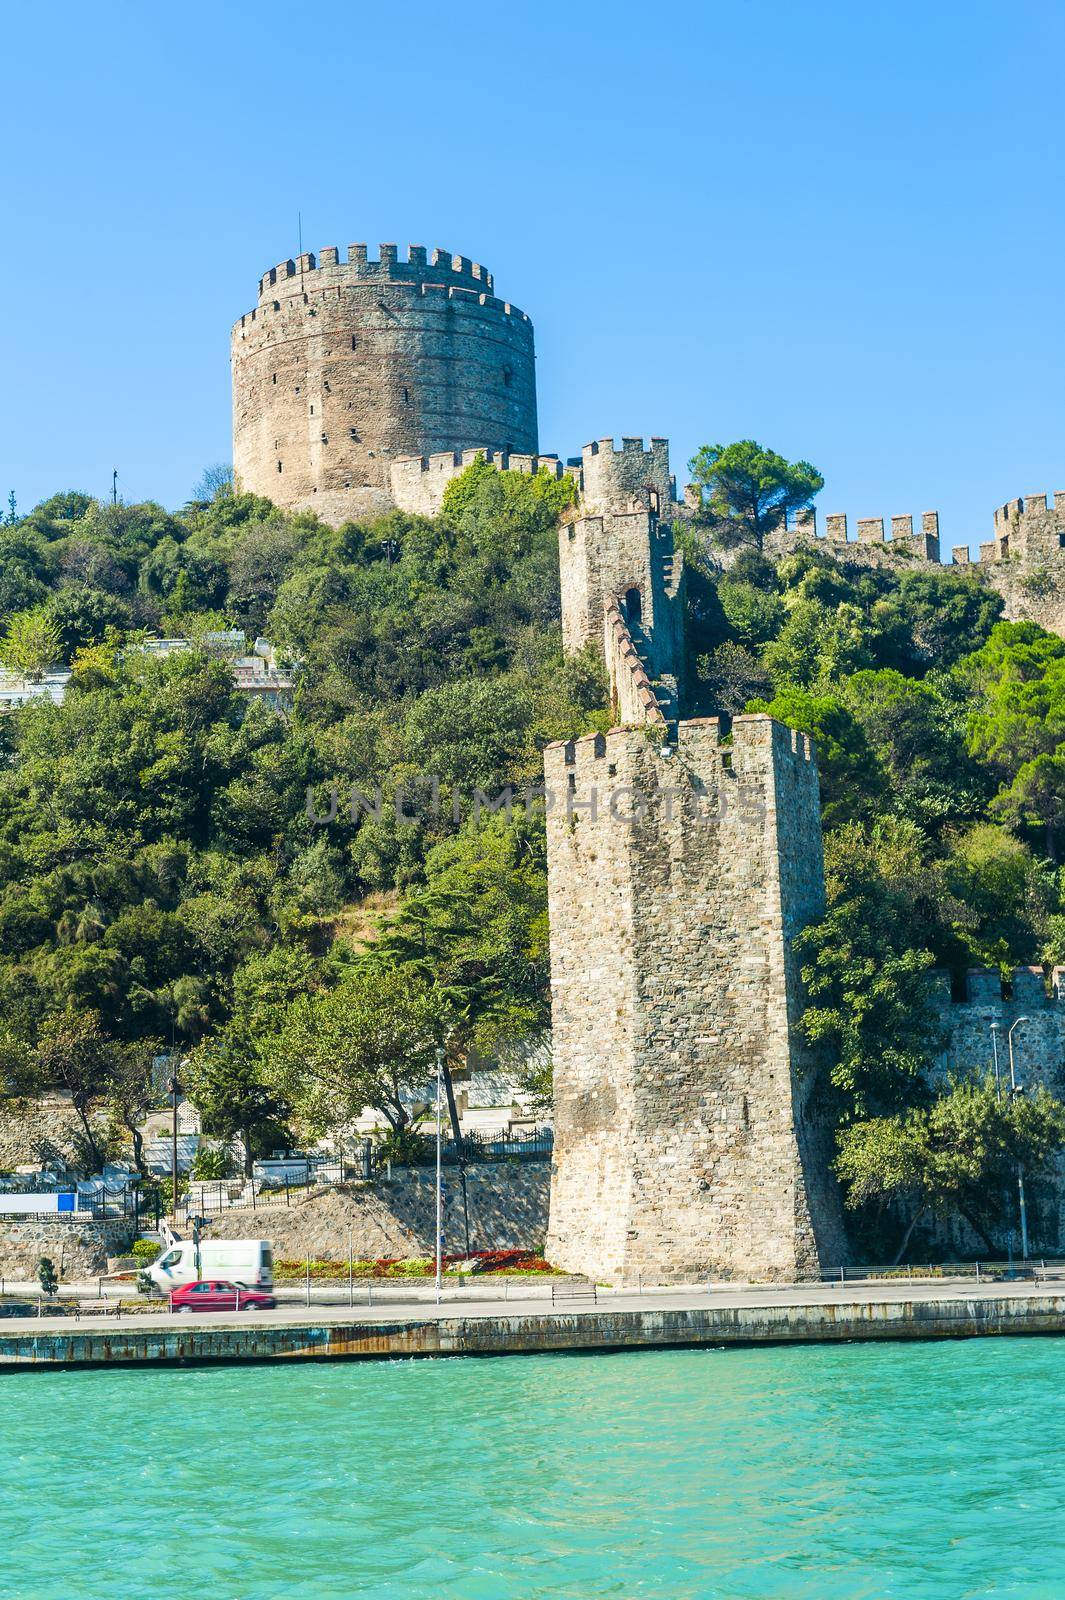 Rumeli Hisari castle in Istanbul in Turkey by fyletto